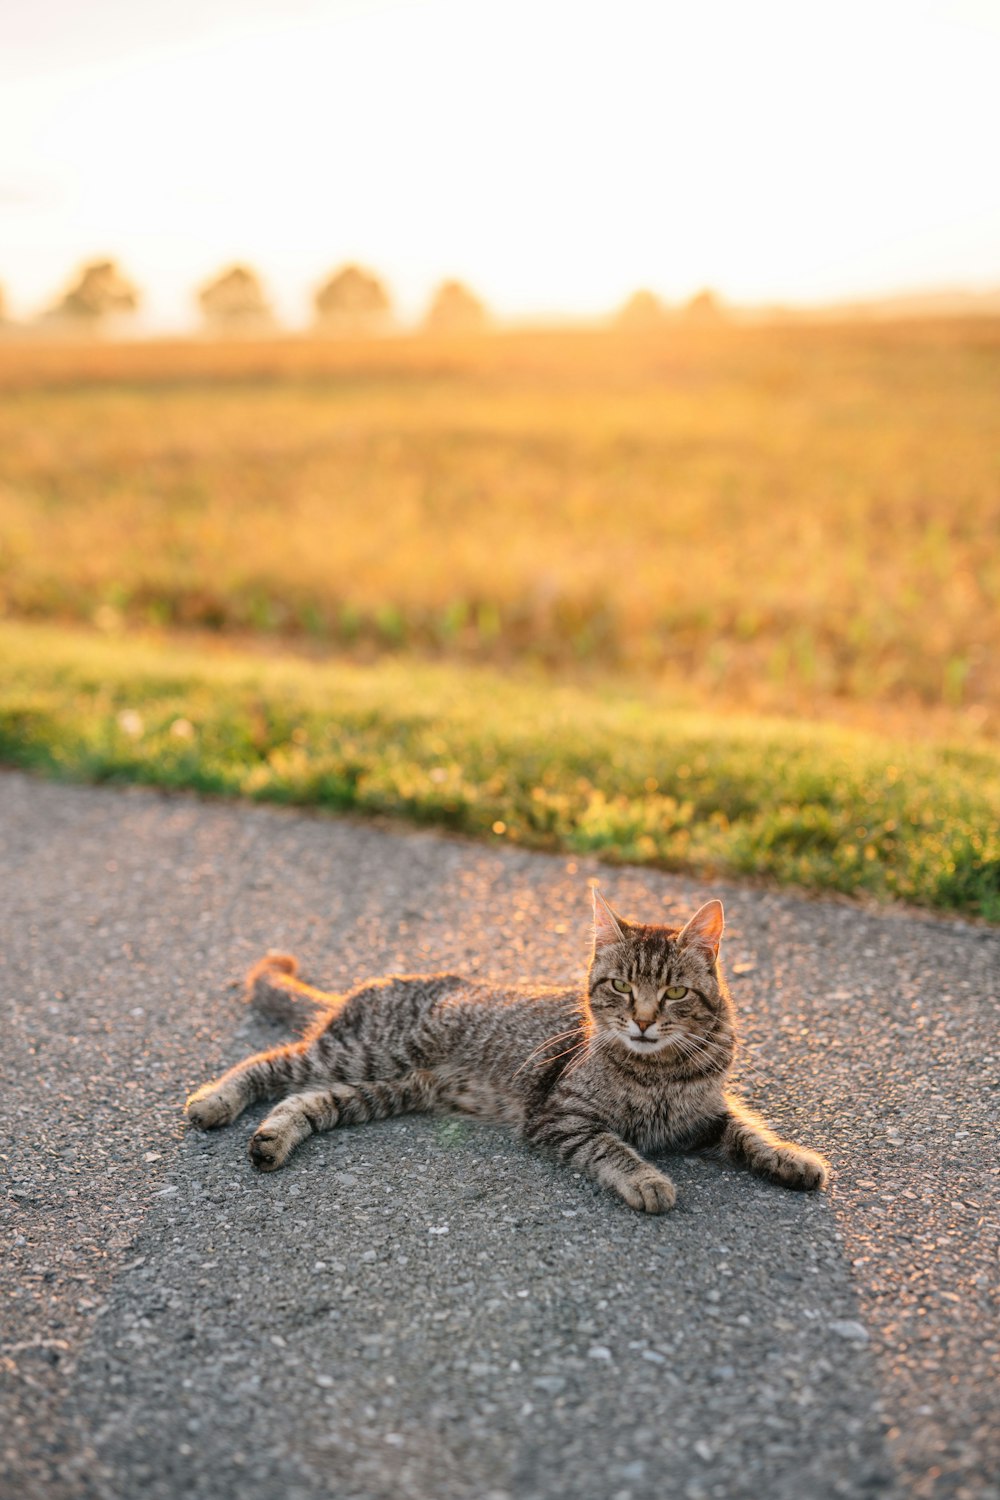 brown tabby cat on gray asphalt road during daytime